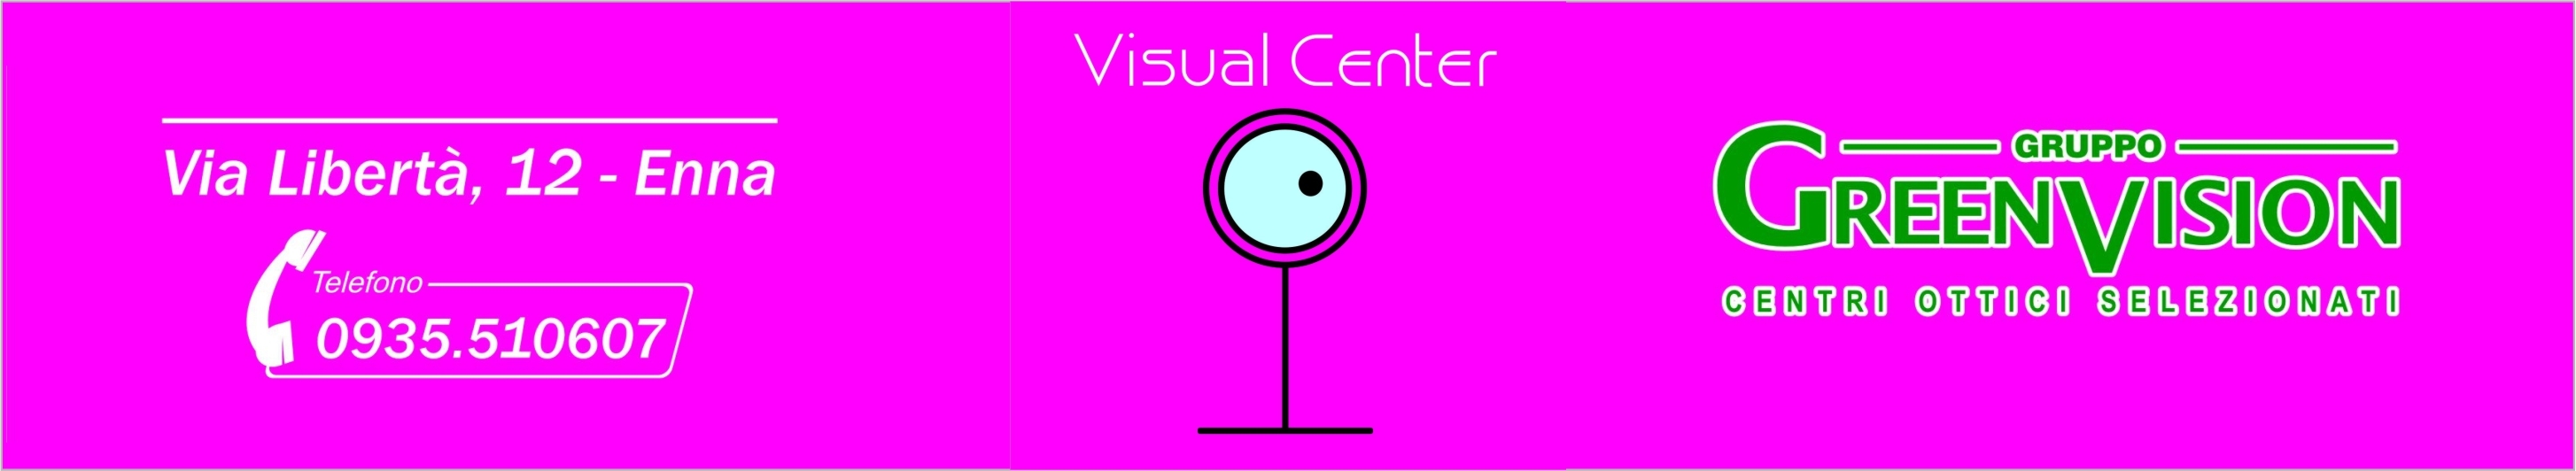 visual center